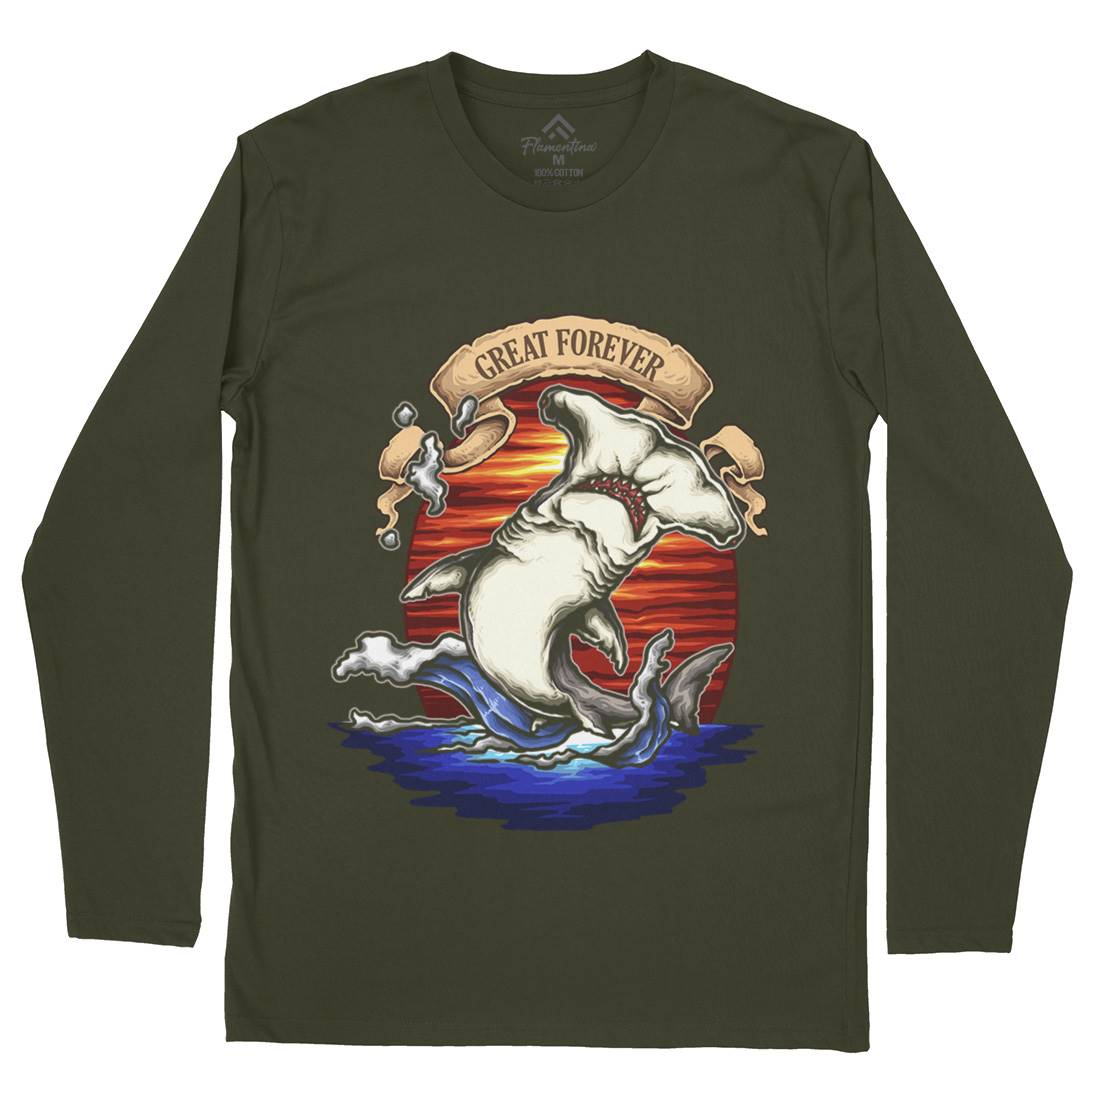 King Of The Ocean Mens Long Sleeve T-Shirt Navy A430